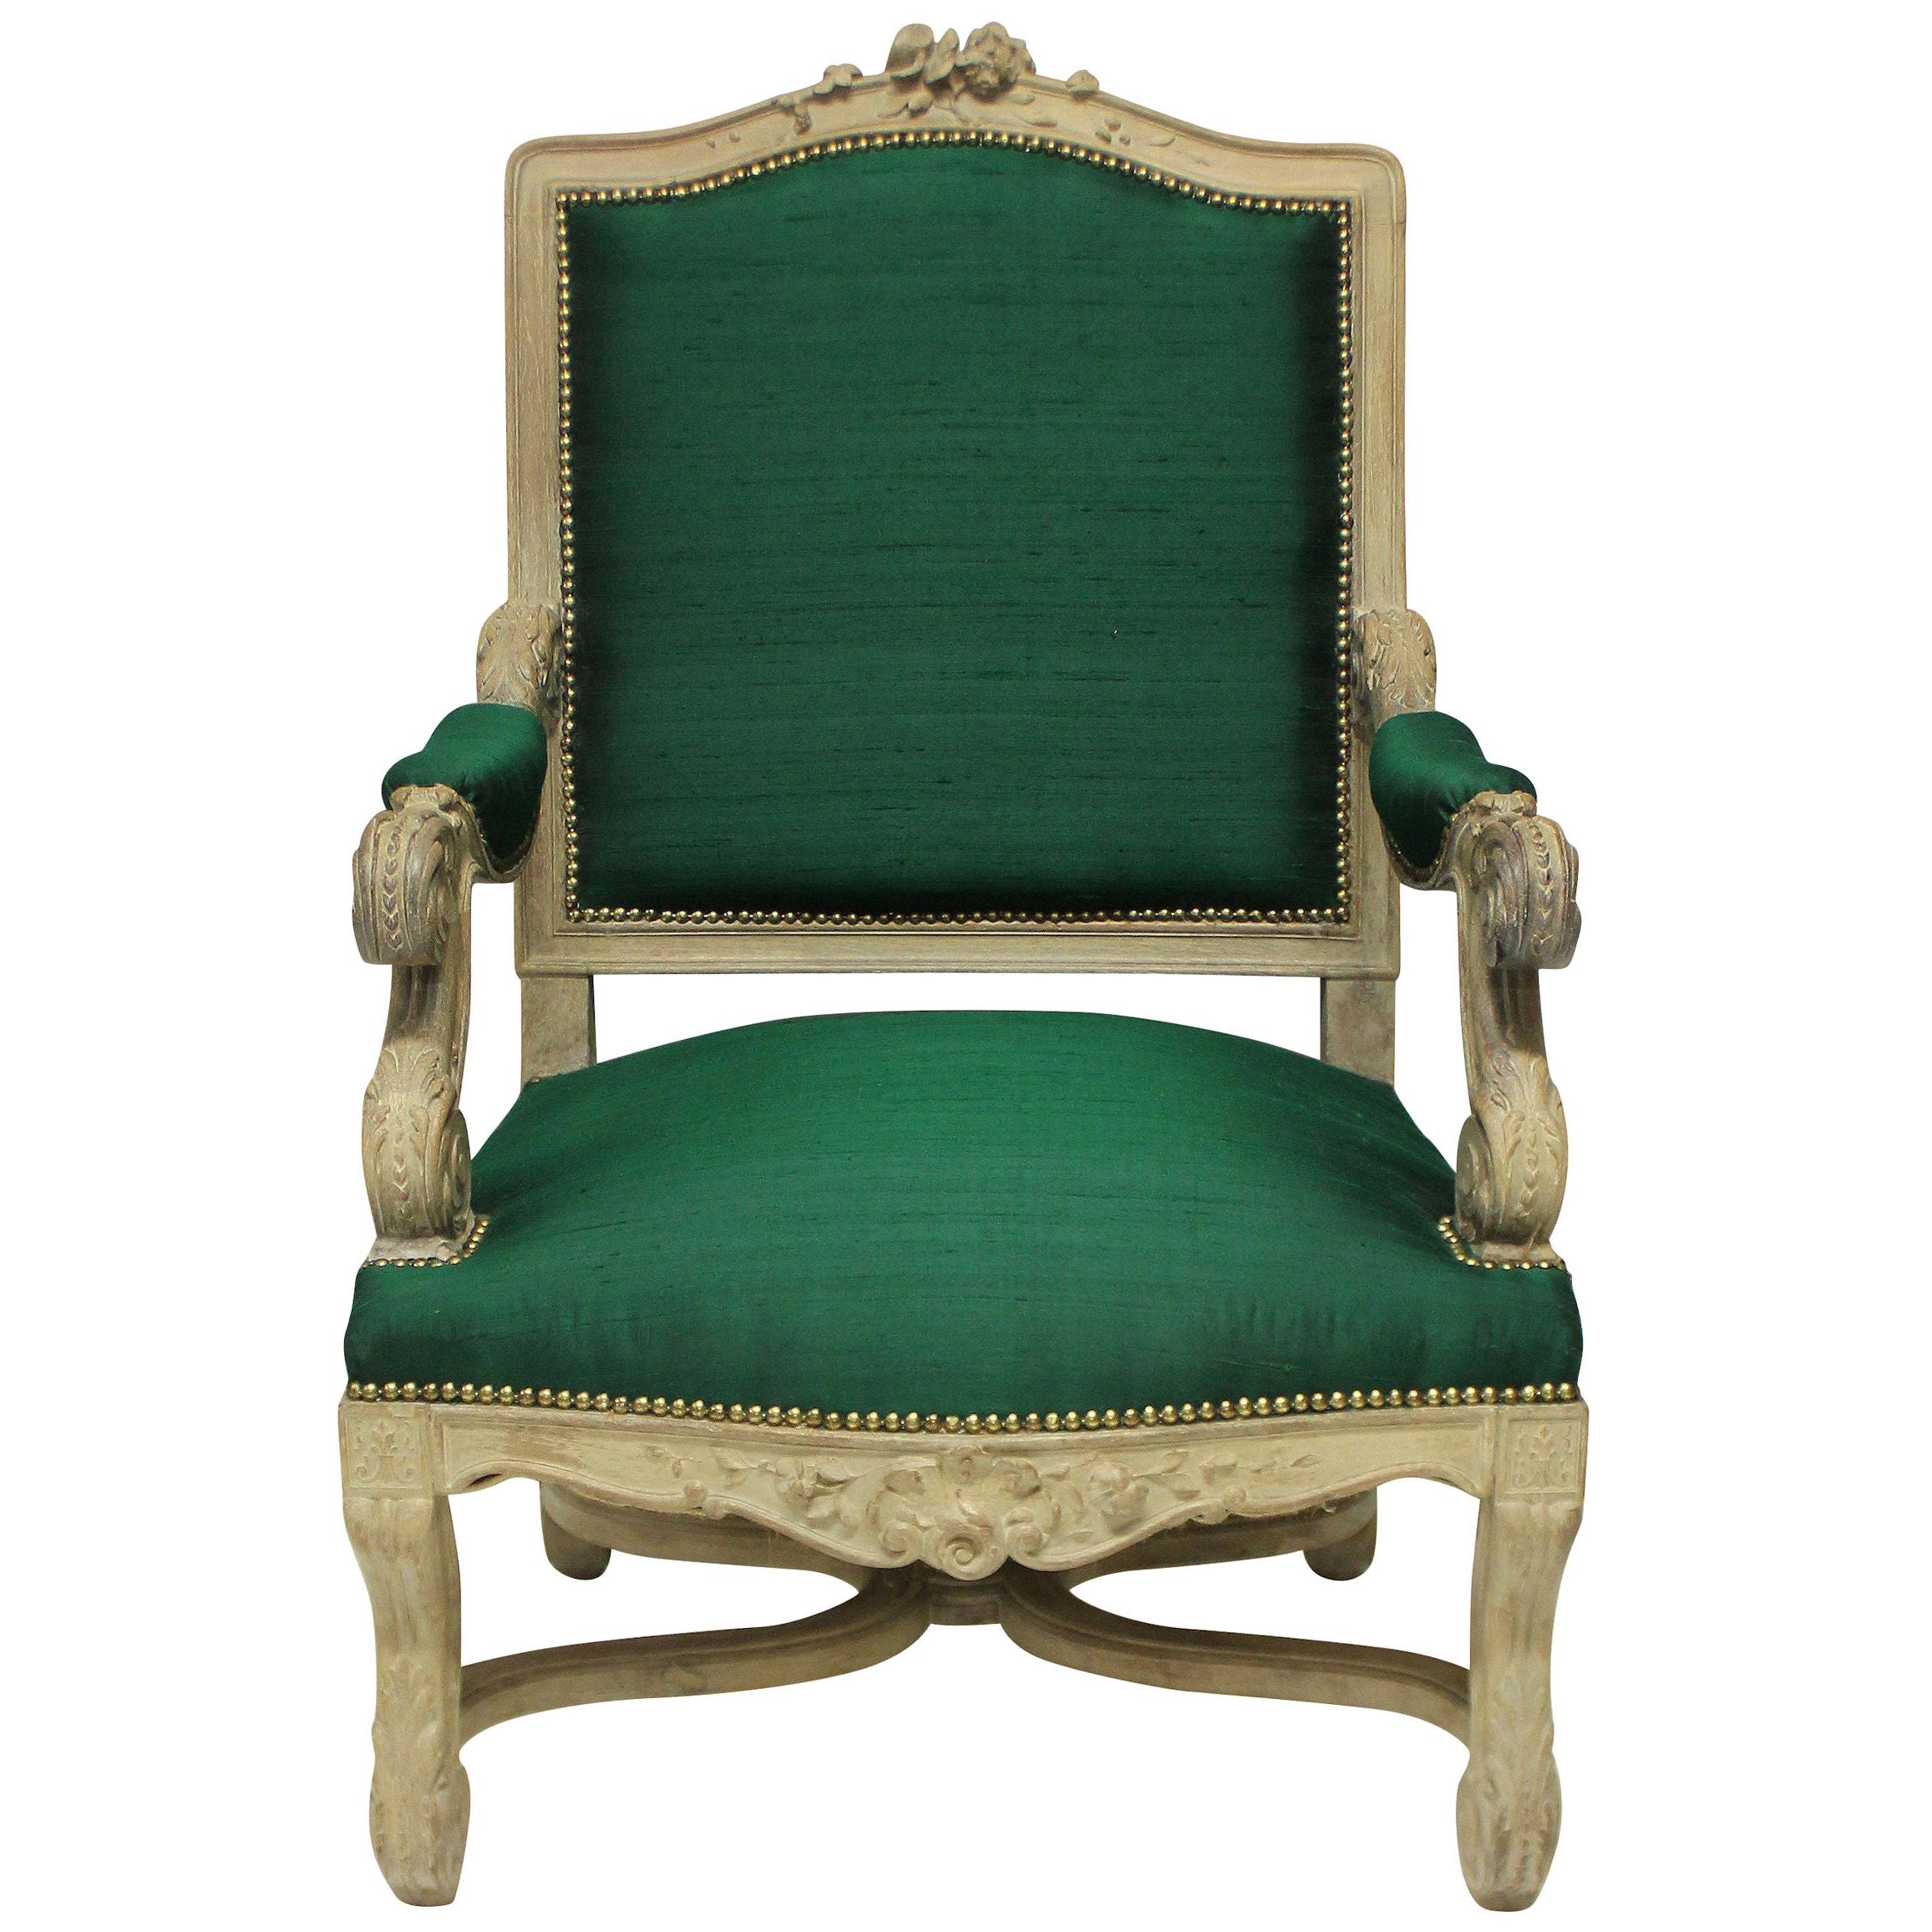 Louis XIV Style Armchair in Emerald Silk